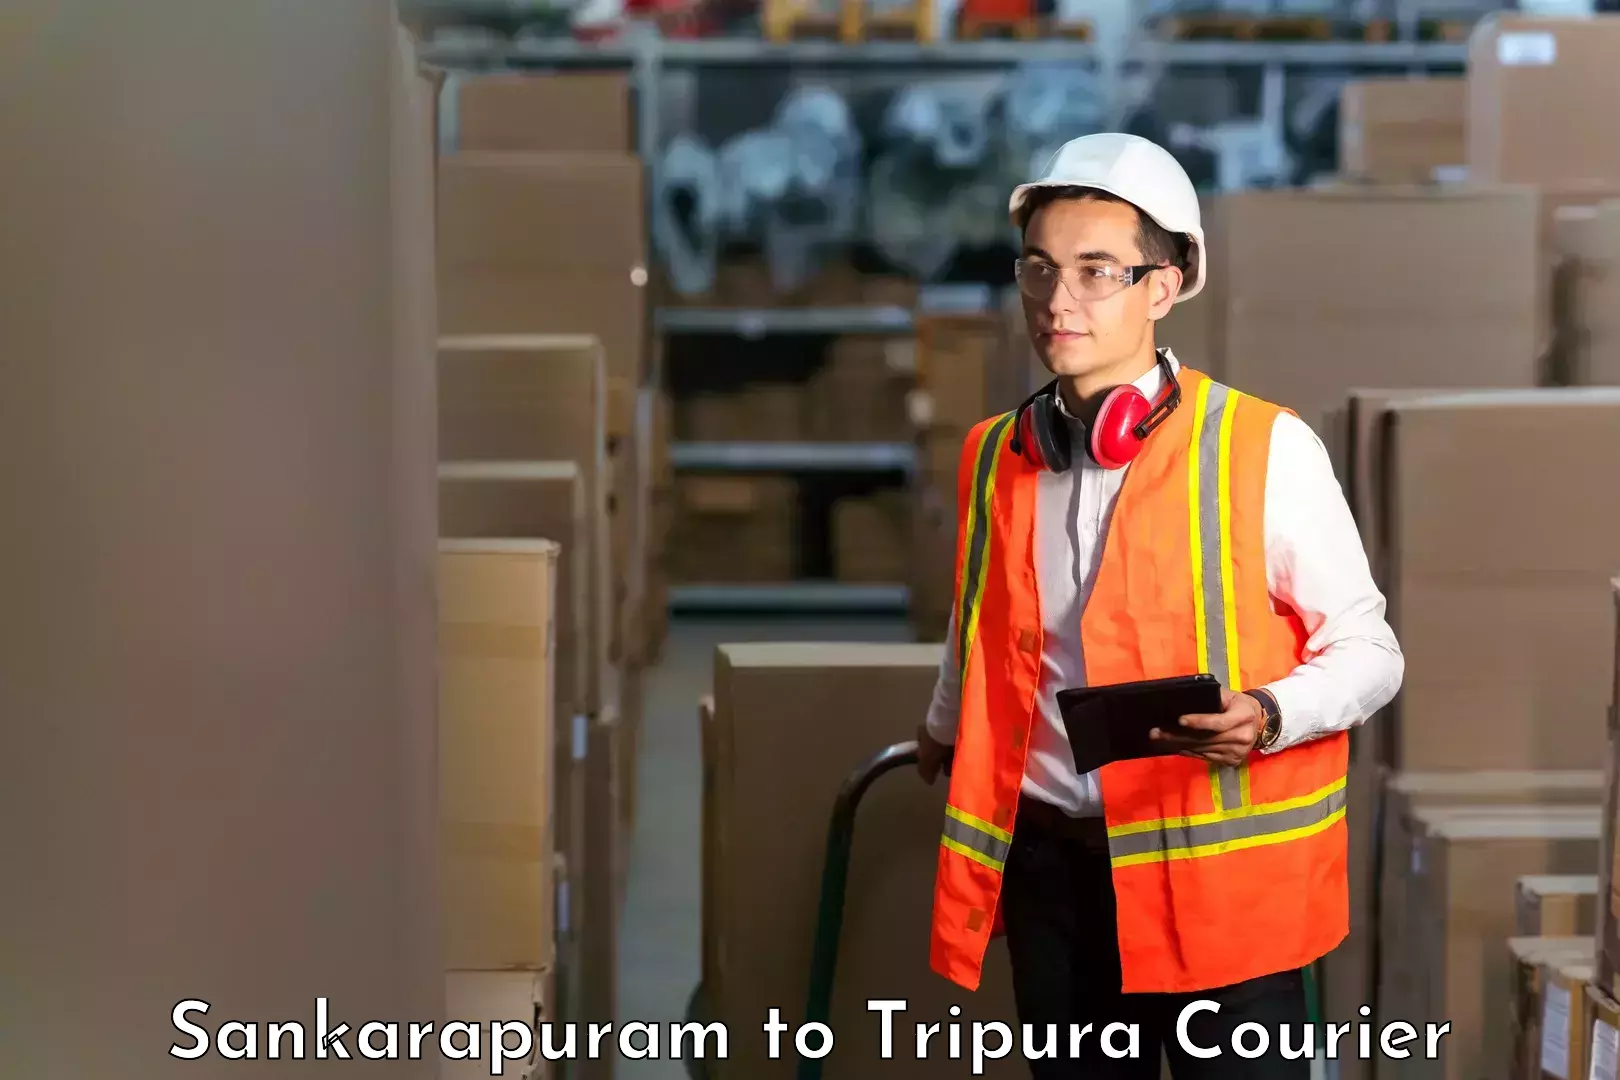 Tailored shipping plans in Sankarapuram to Udaipur Tripura